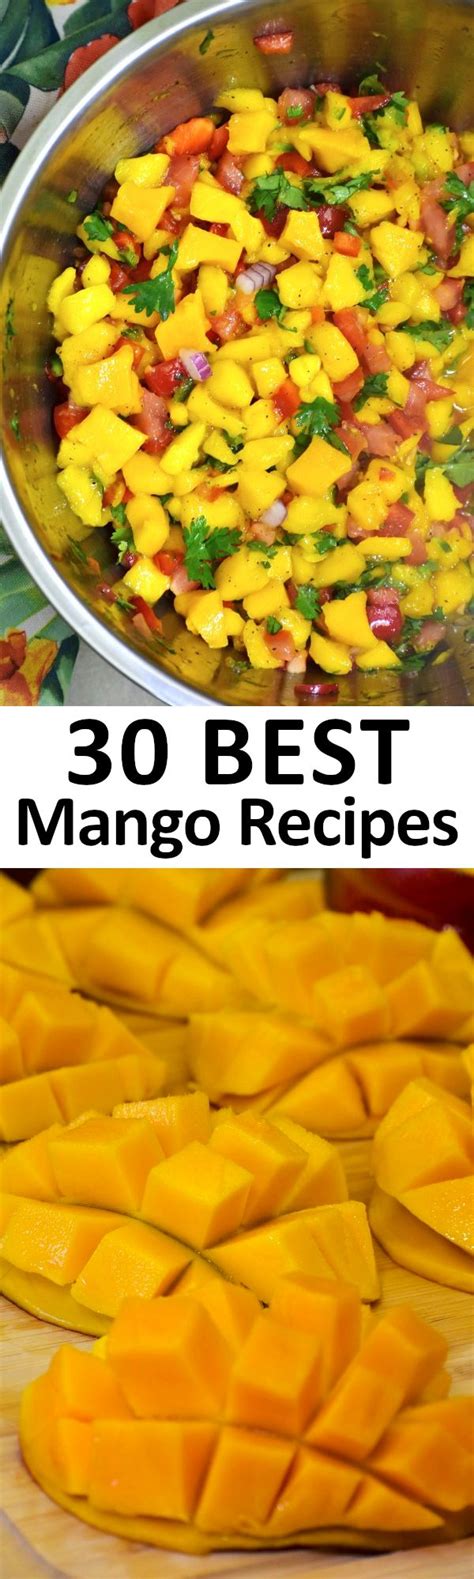 The 30 BEST Mango Recipes - GypsyPlate